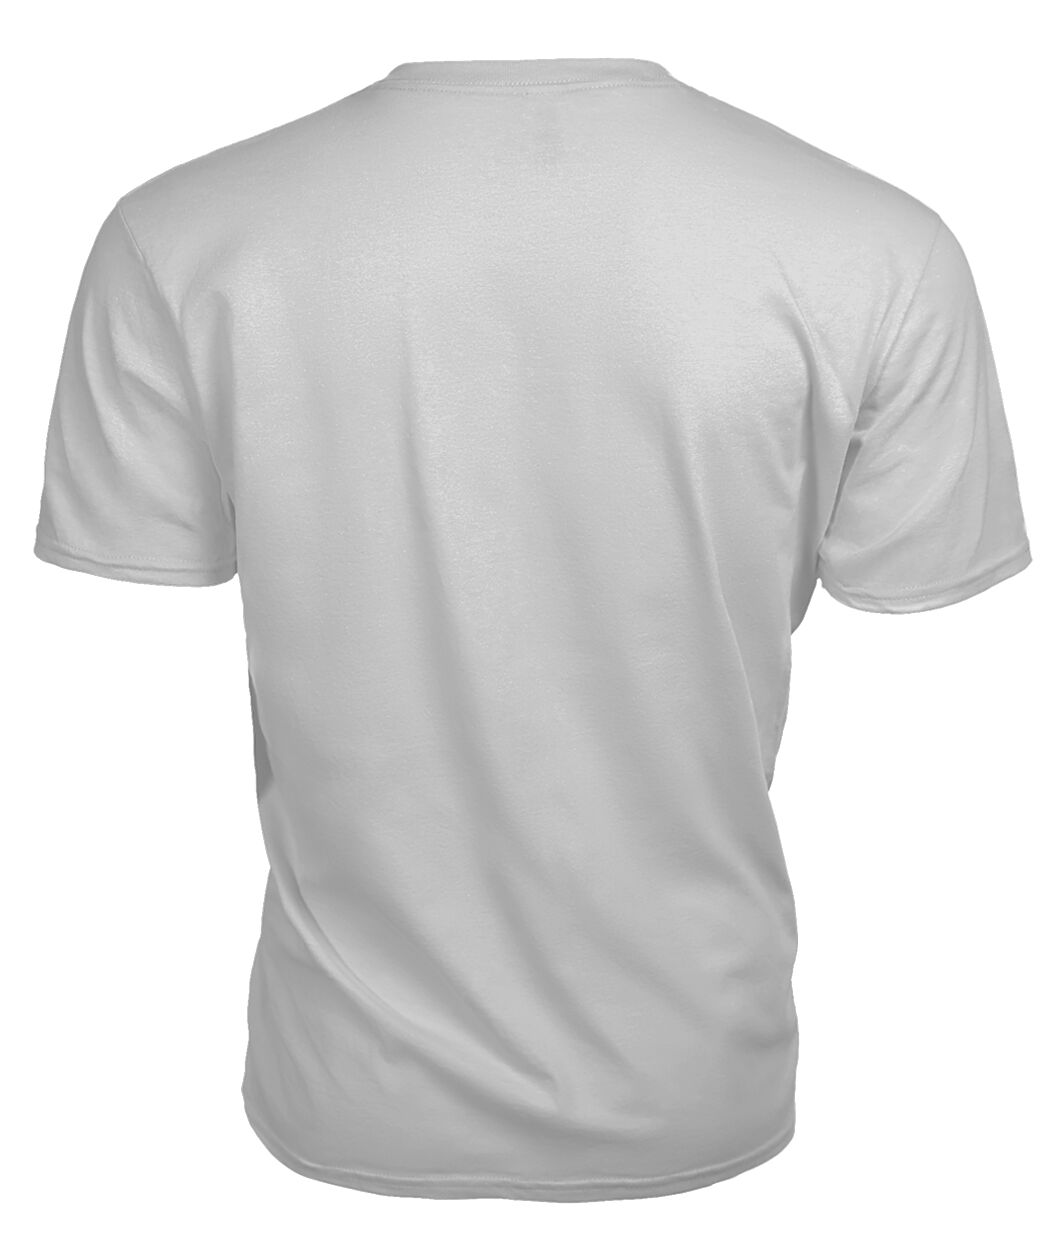 Newton Family Tartan - 2D T-shirt